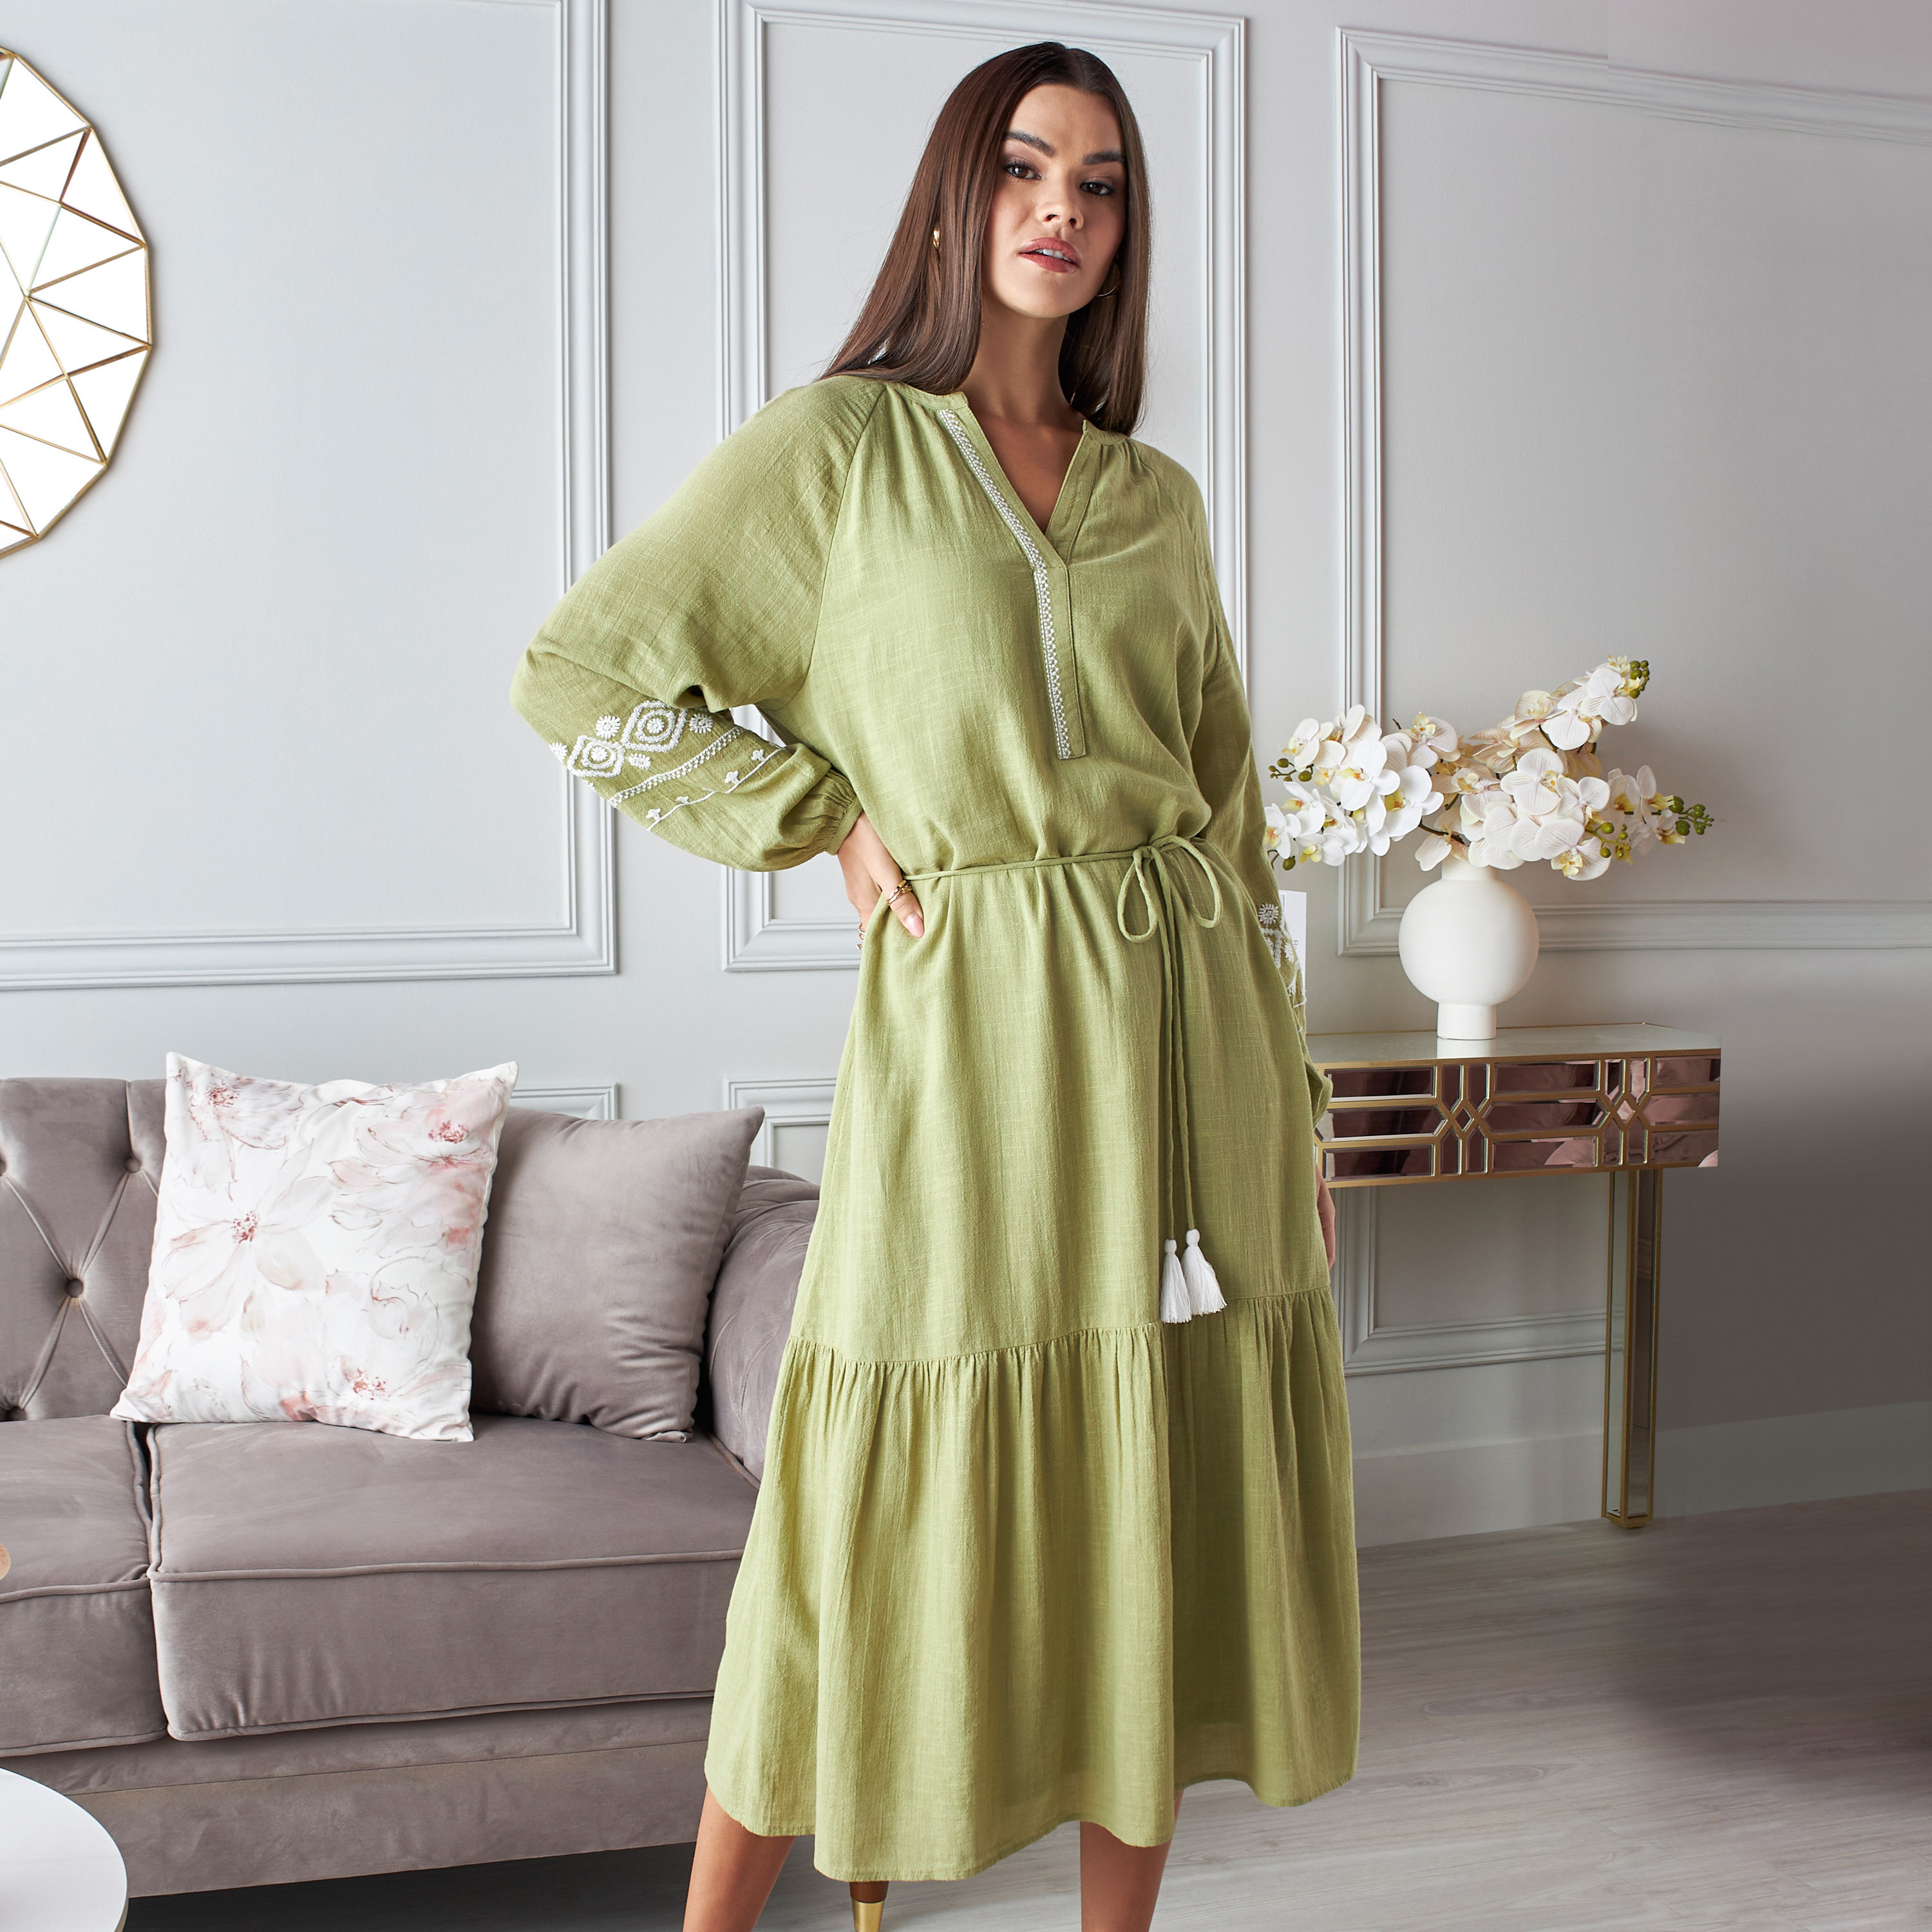 Shop Women's Plus Size Clothing | UAE Max